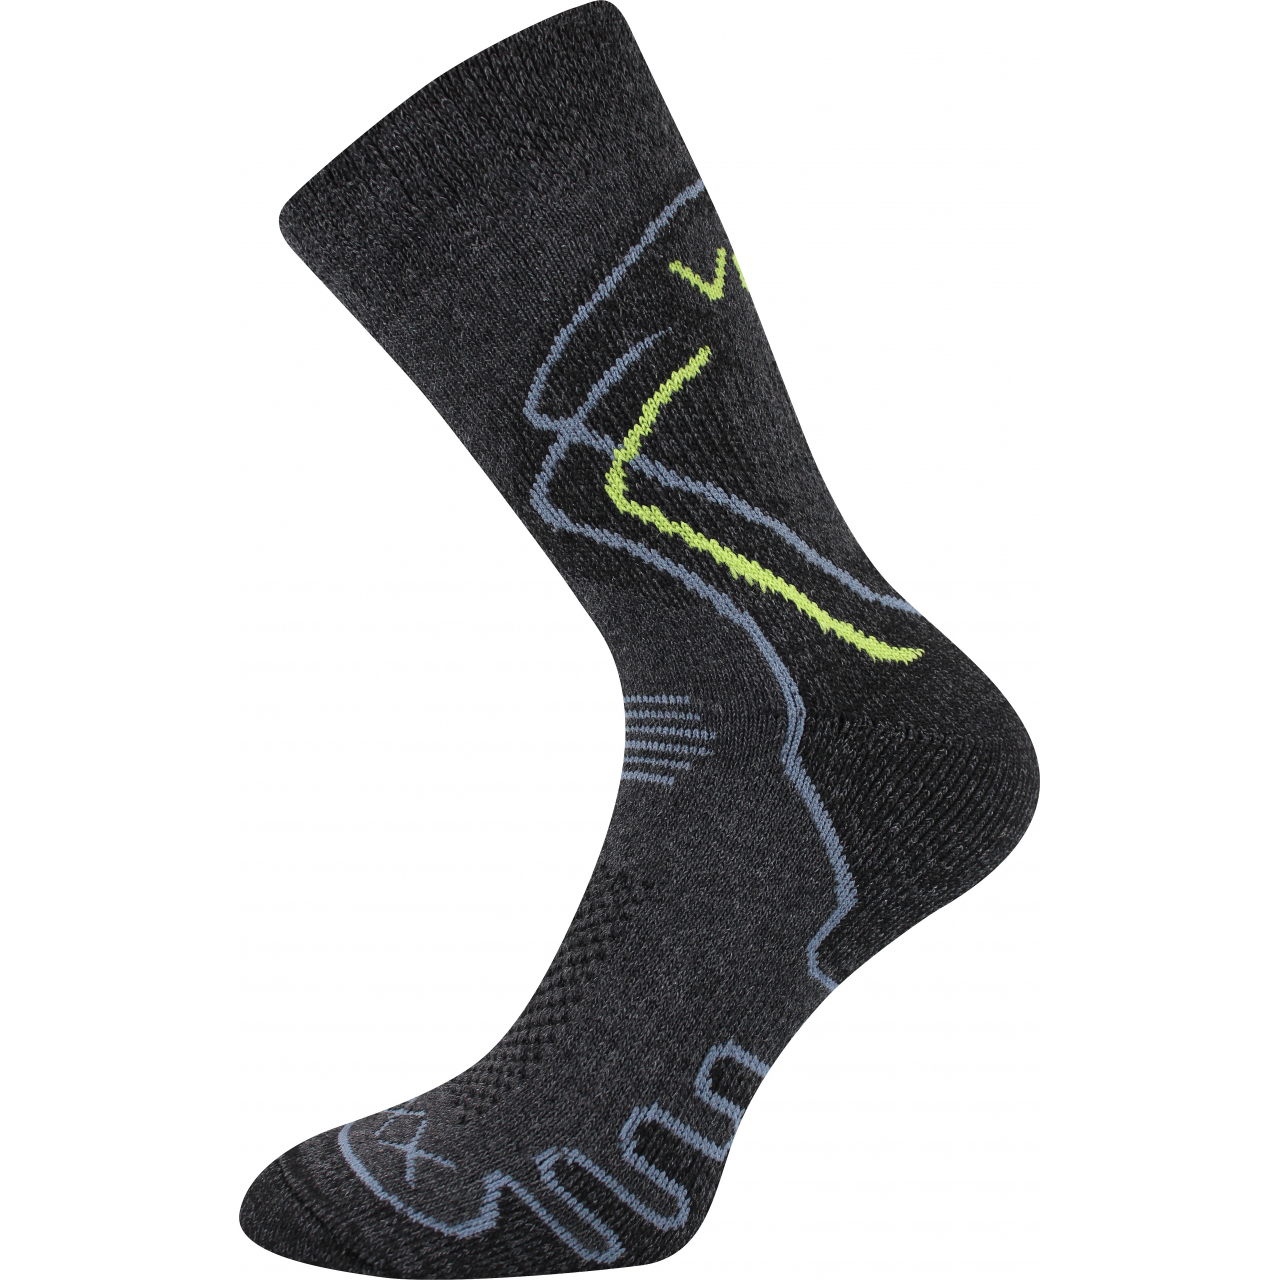 Ponožky trekingové unisex Voxx Limit III - tmavě šedé, 39-42